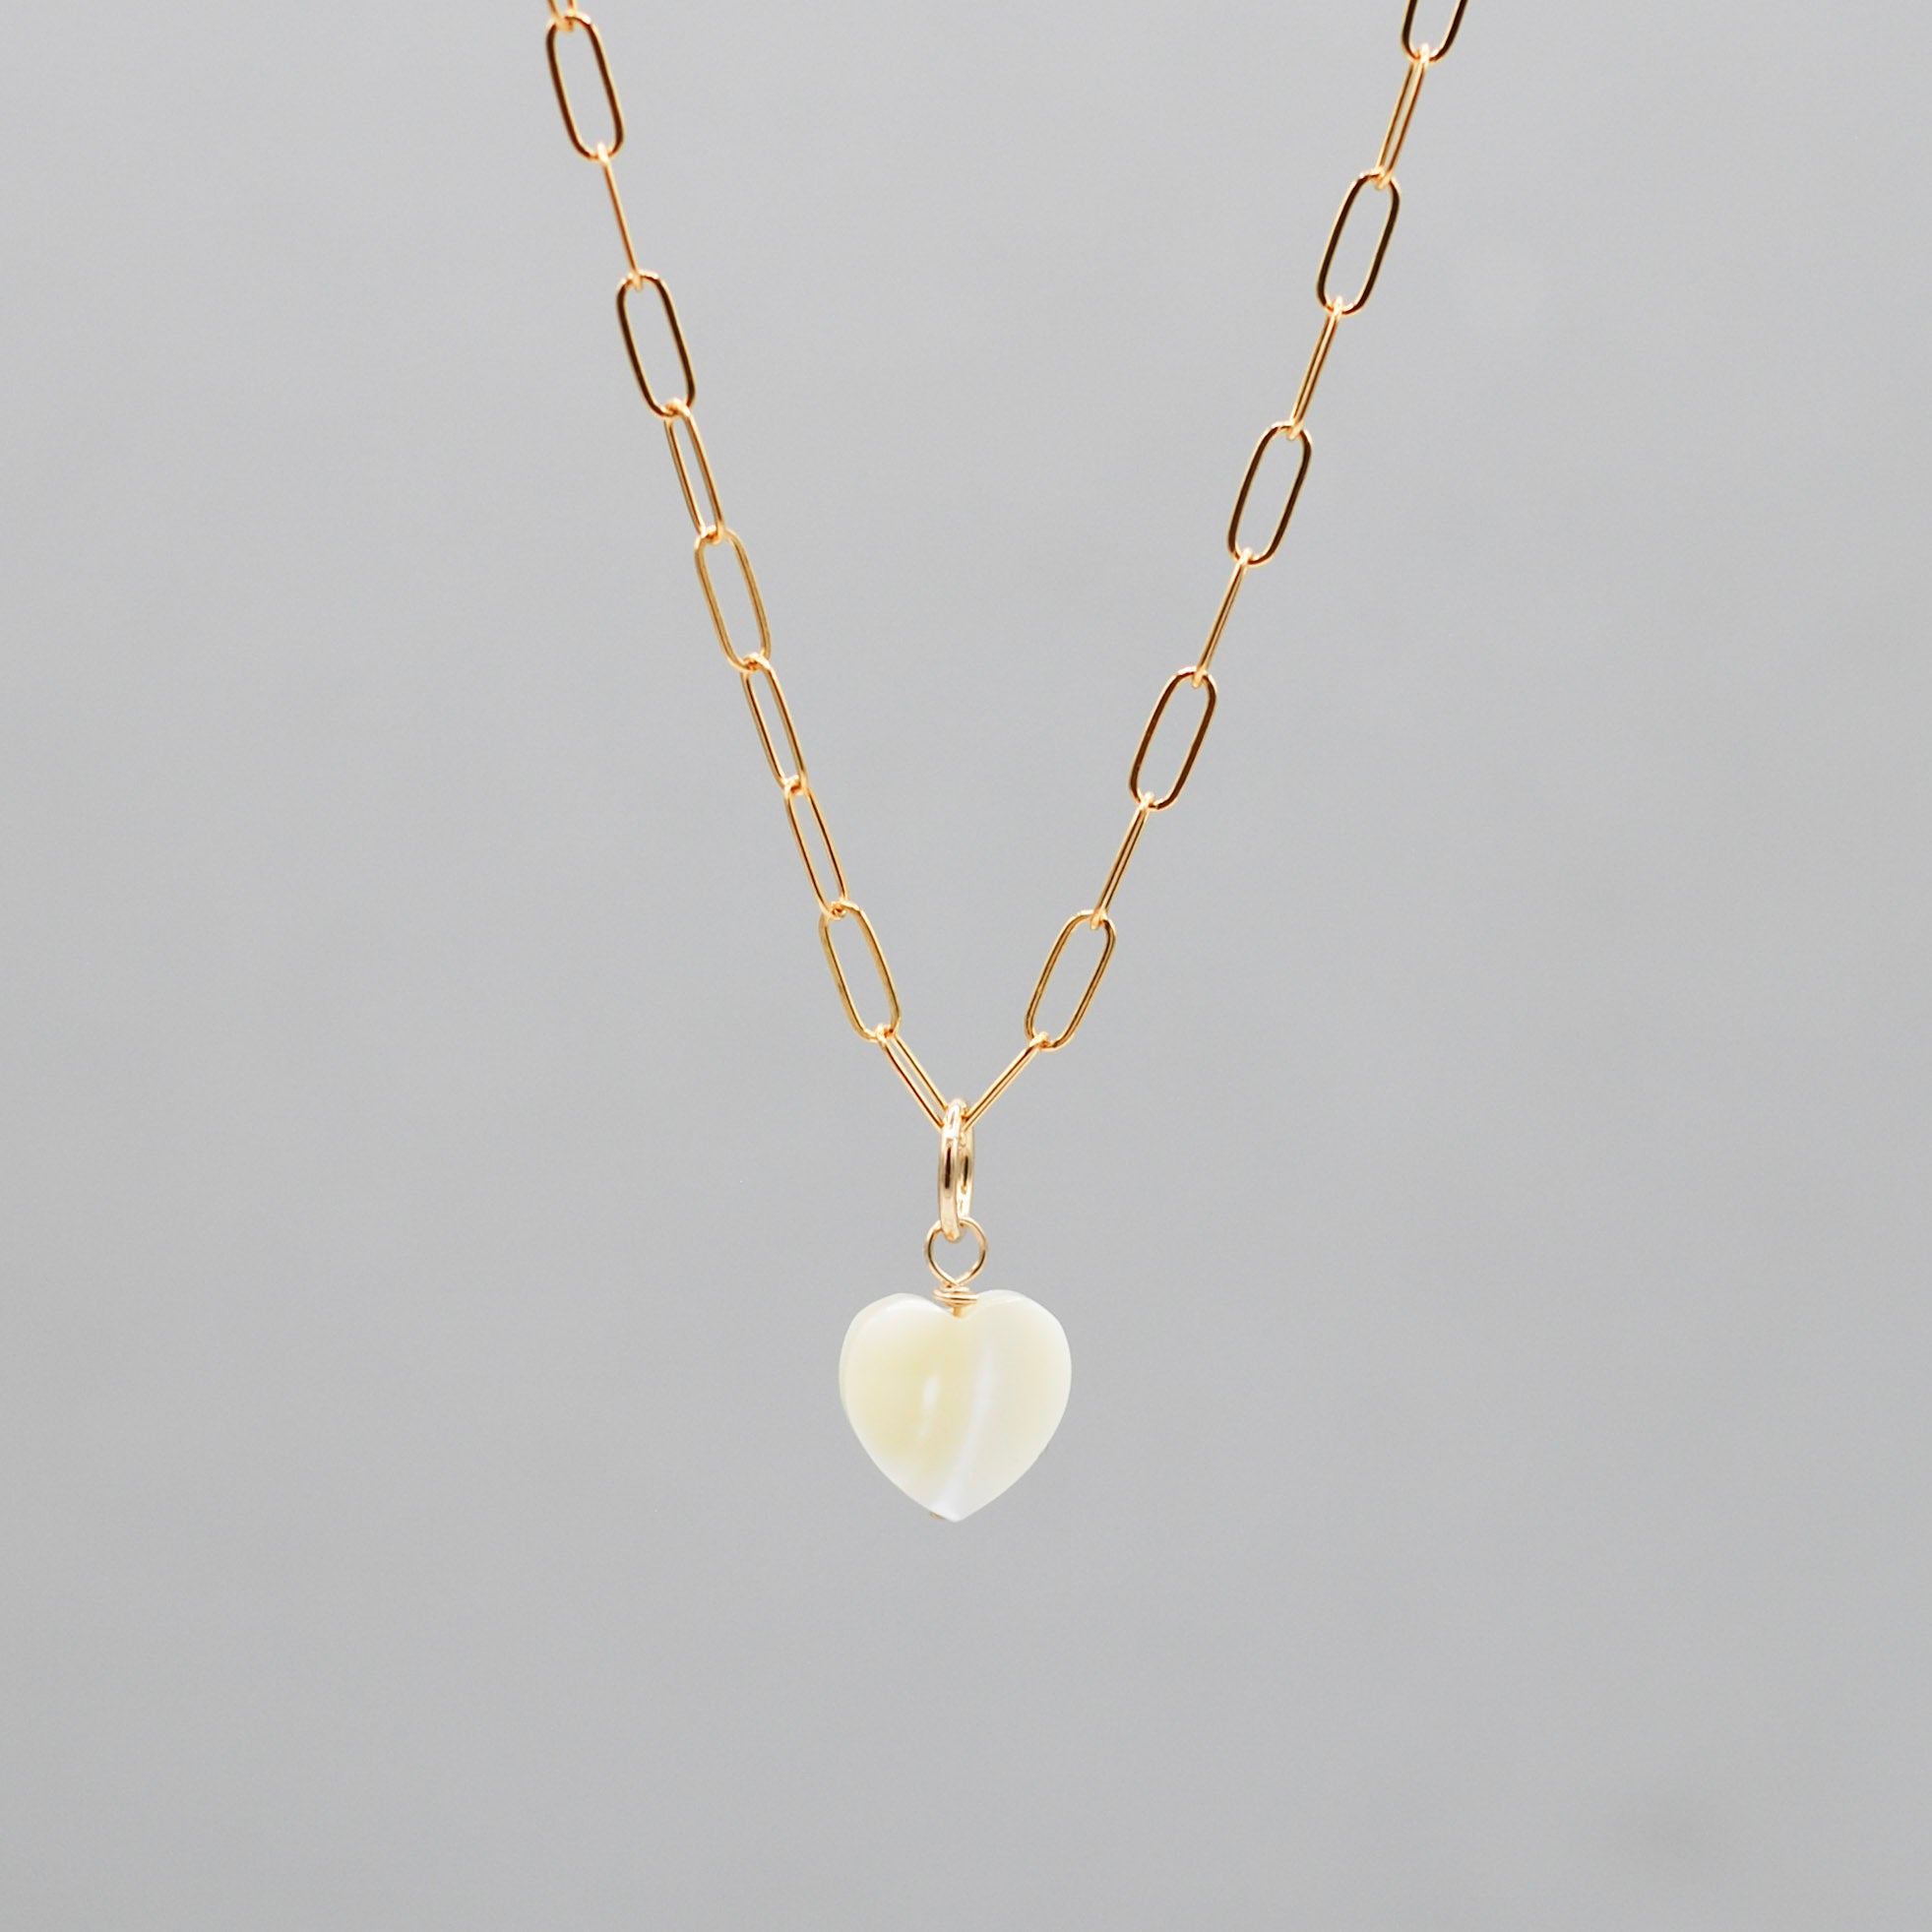 14K Gold Filled Heart Charm Necklace - Jewel Ya